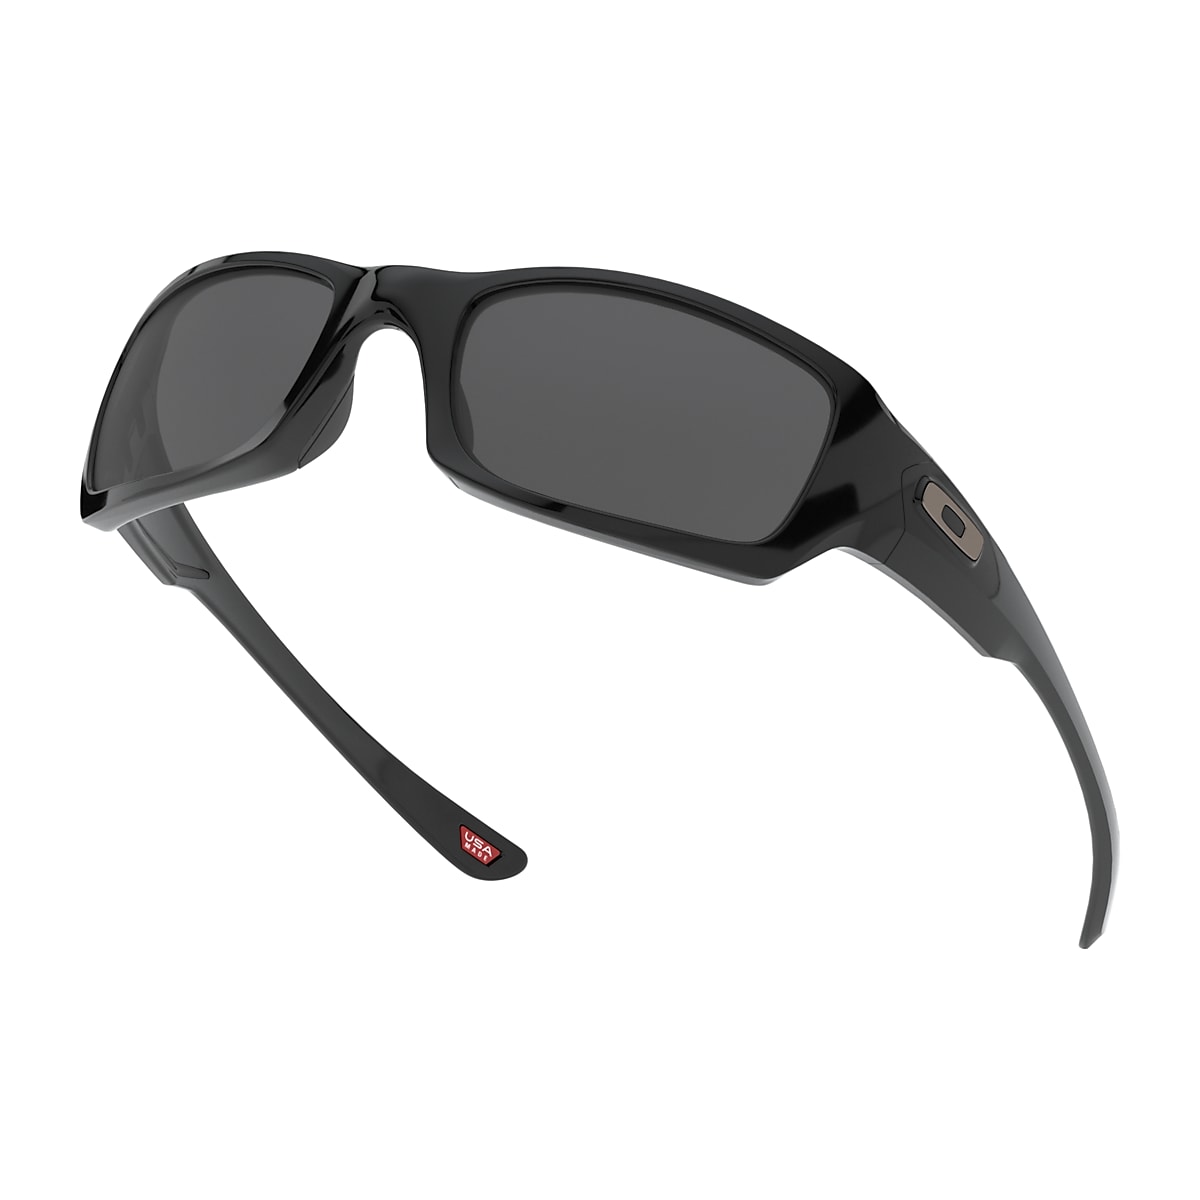 Oakley Men's Fives Squared® Sunglasses